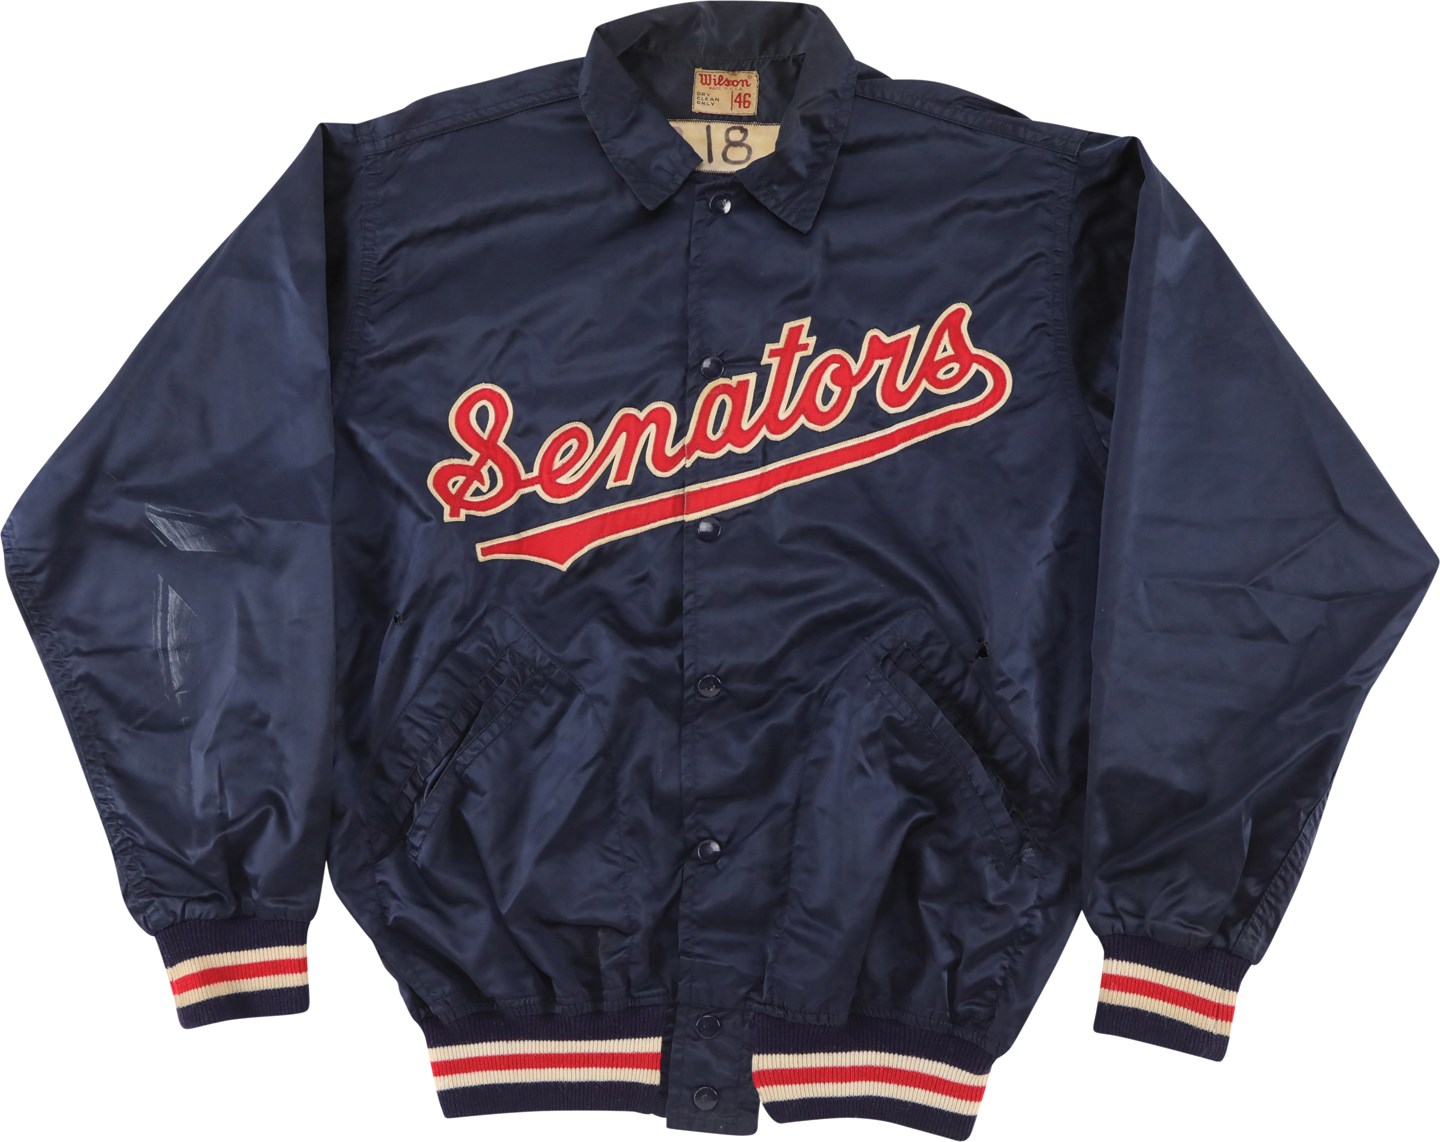 - Circa 1970 Washington Senators Game Worn Dugout Jacket